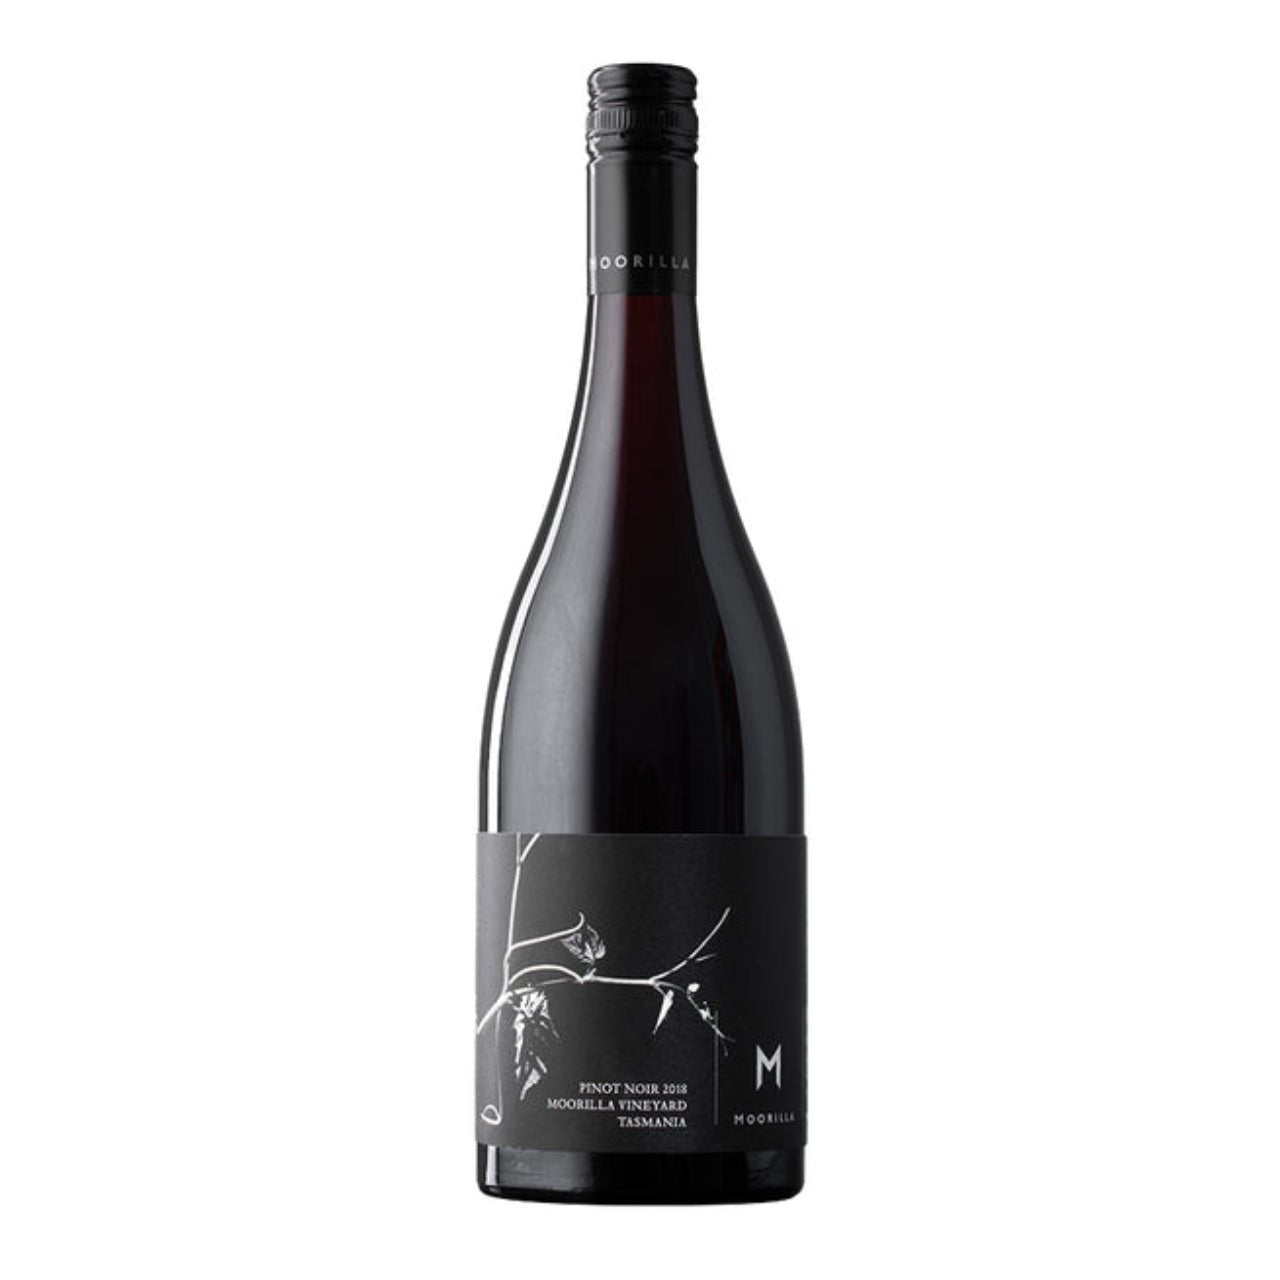 Moorilla Muse Pinot Noir 2018 - Wine Australia Red - Liquor Wine Cave